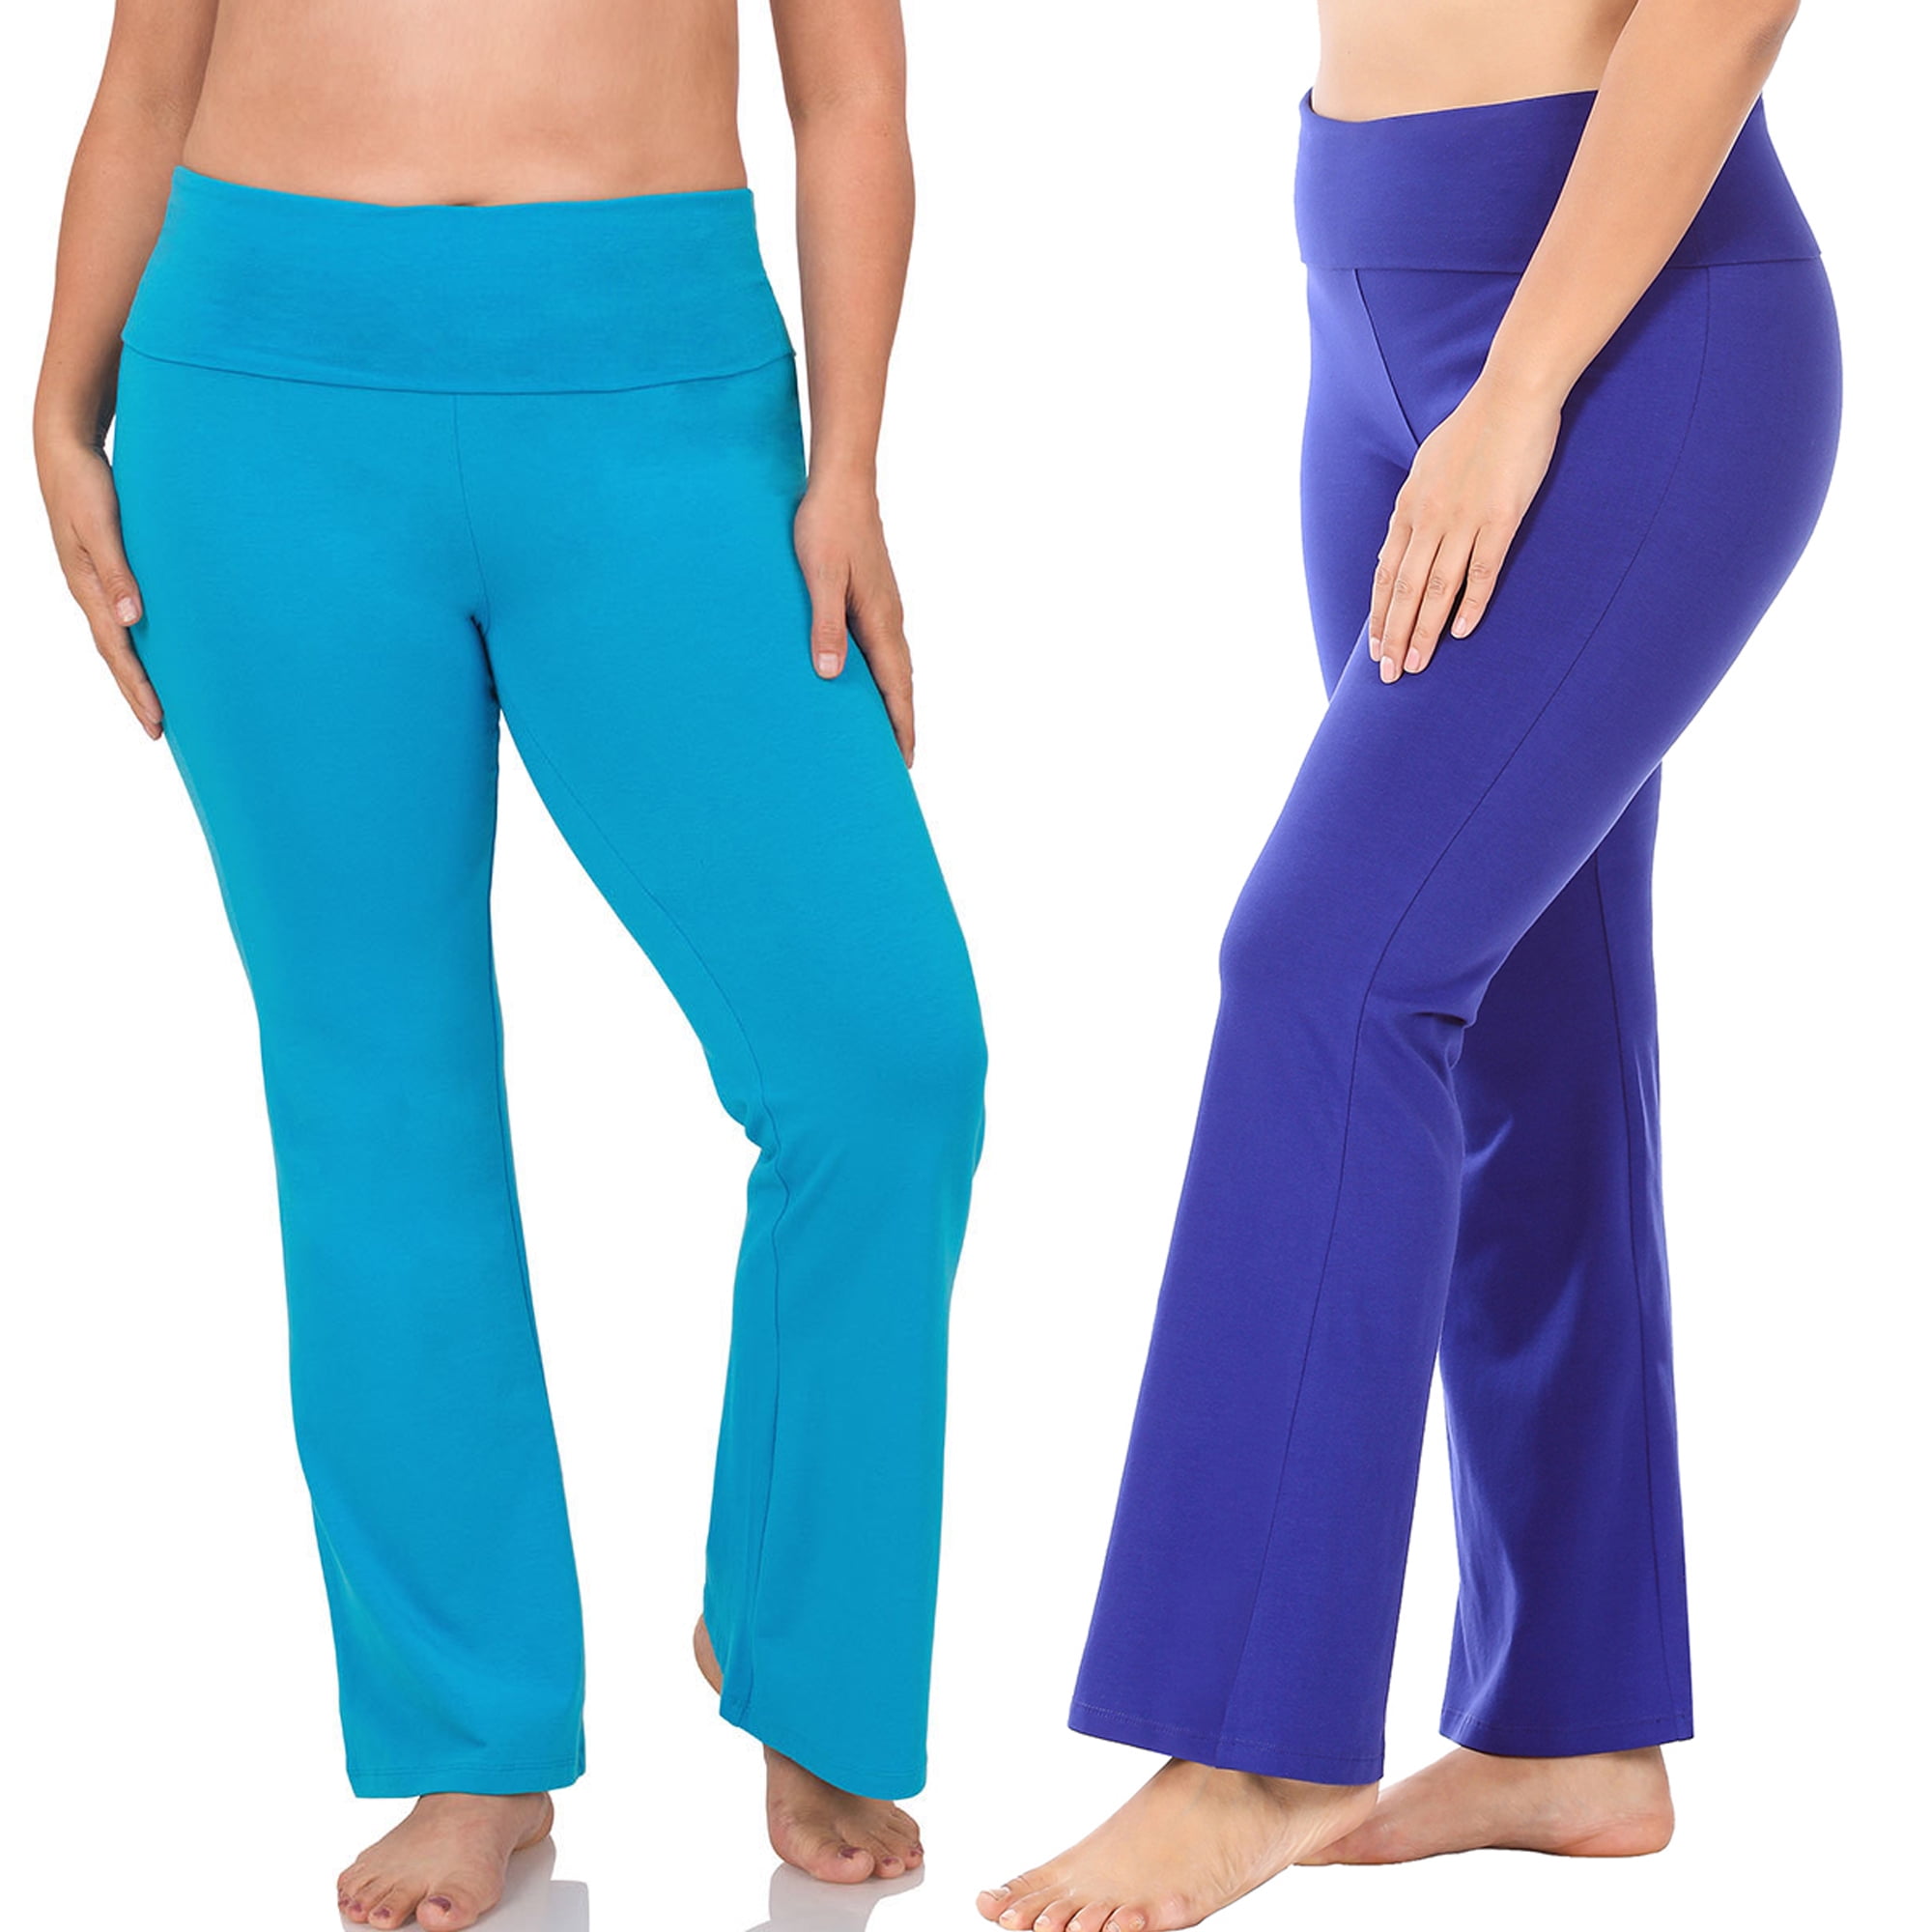 Yoga Pants Basic Foldover Womens Plus Cotton Spandex Workout Lounge Sport Bras 